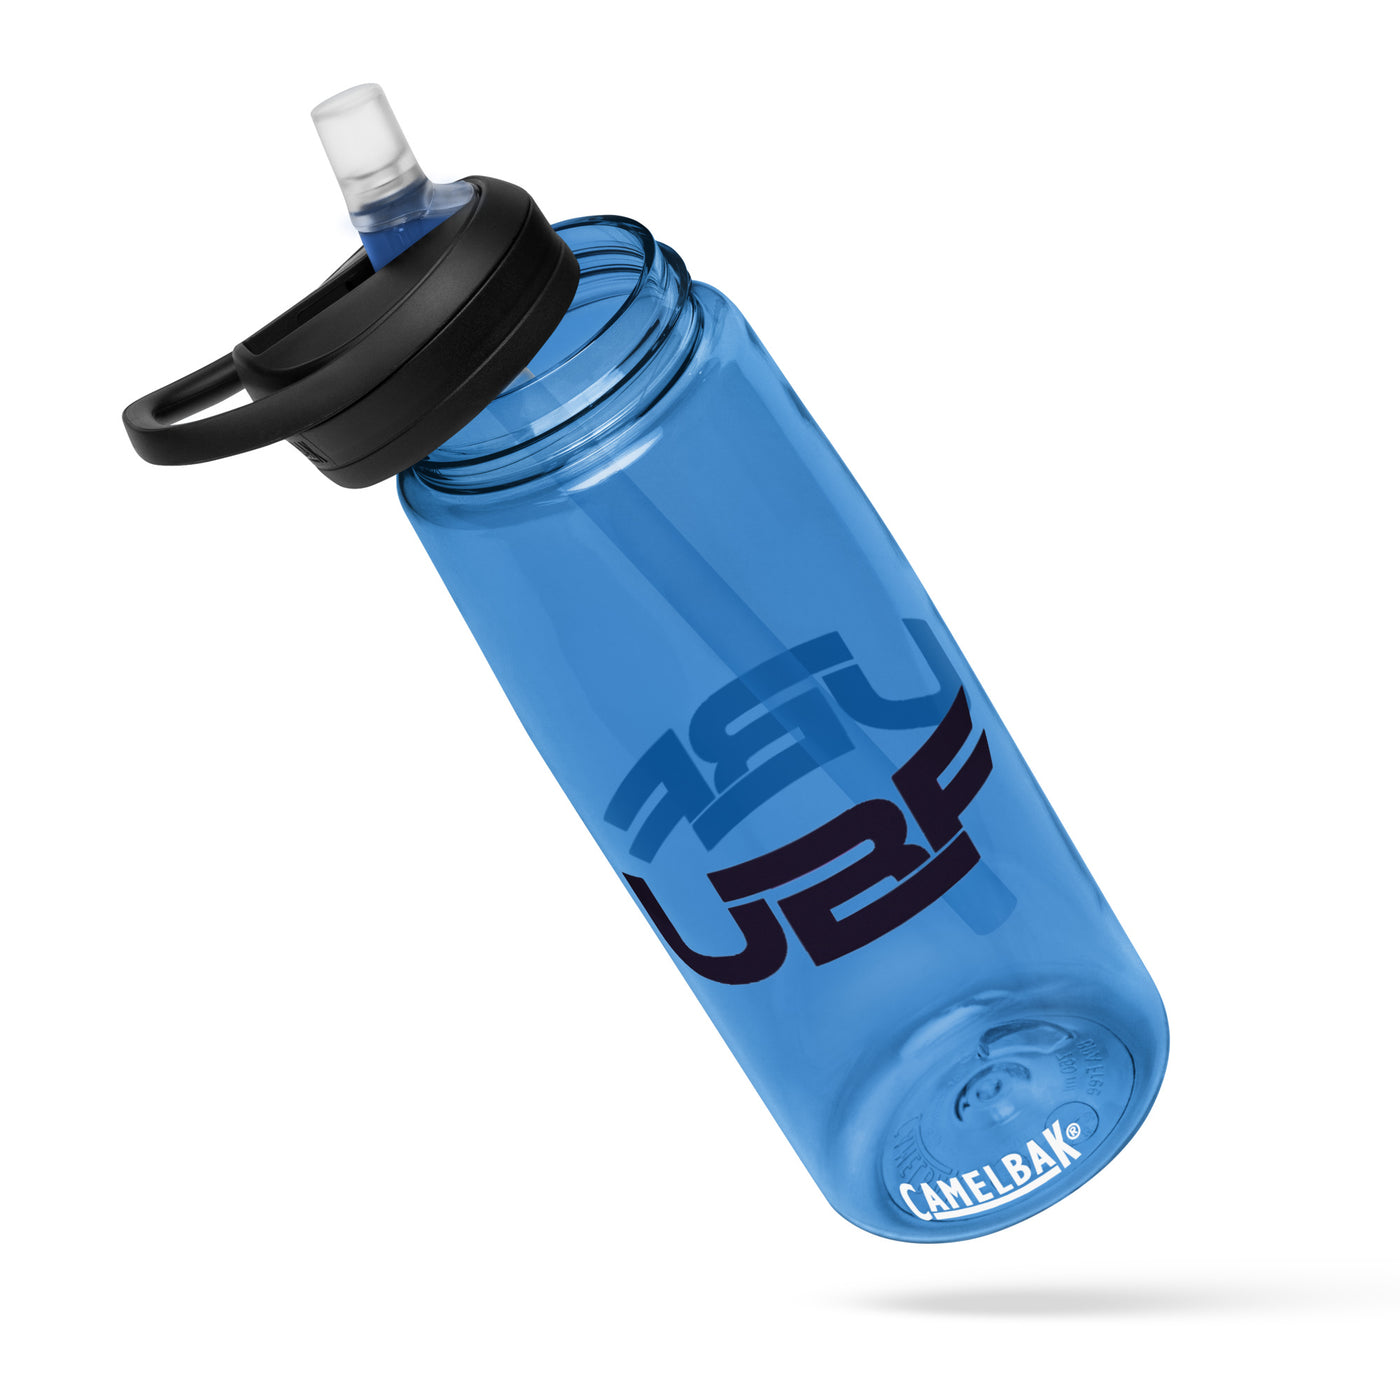 UBF Camelbak Sports water bottle